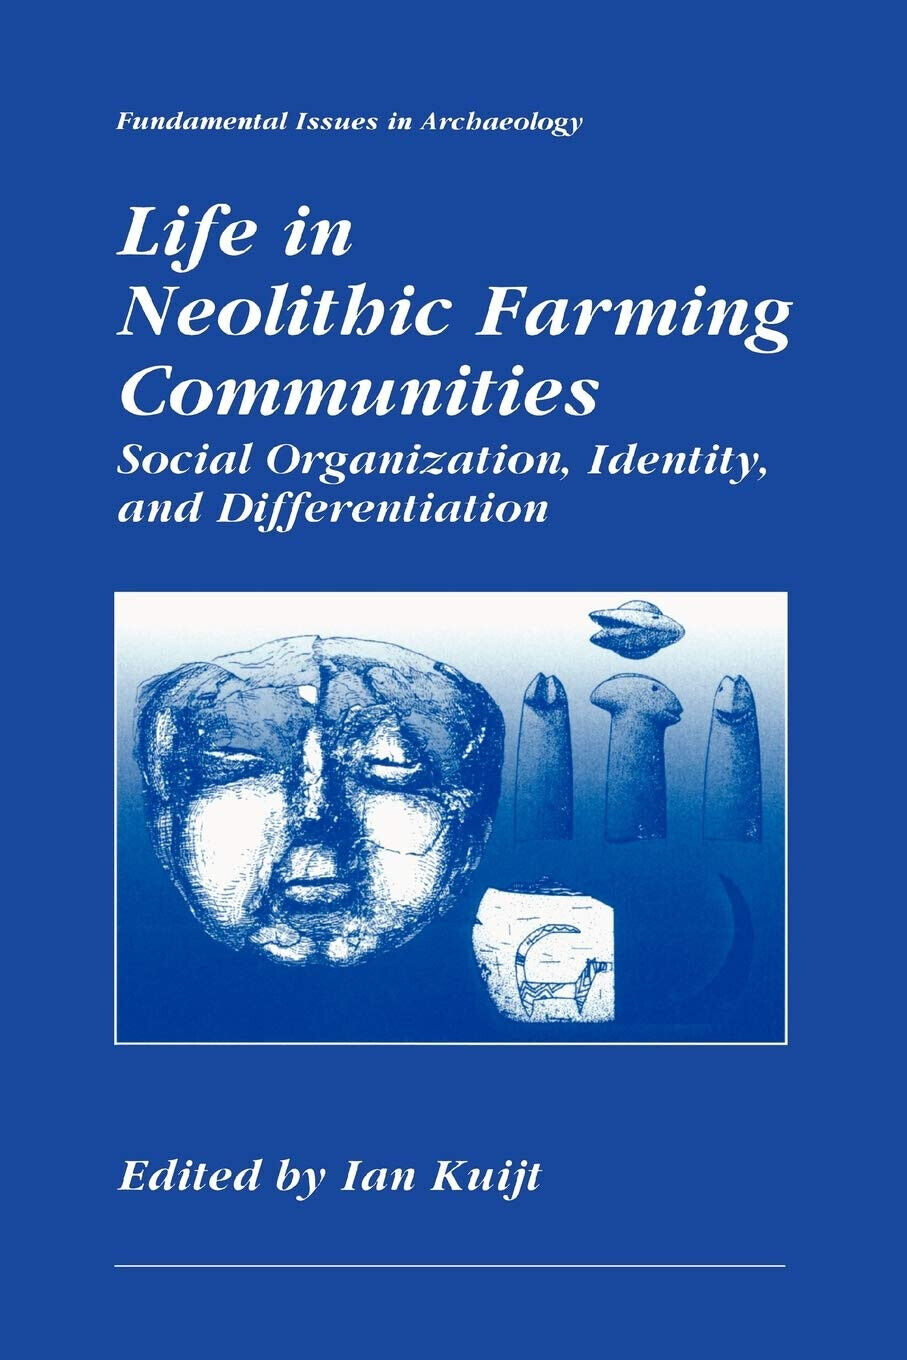 Life in Neolithic Farming Communities -  Ian Kuijt - Springer, 2010